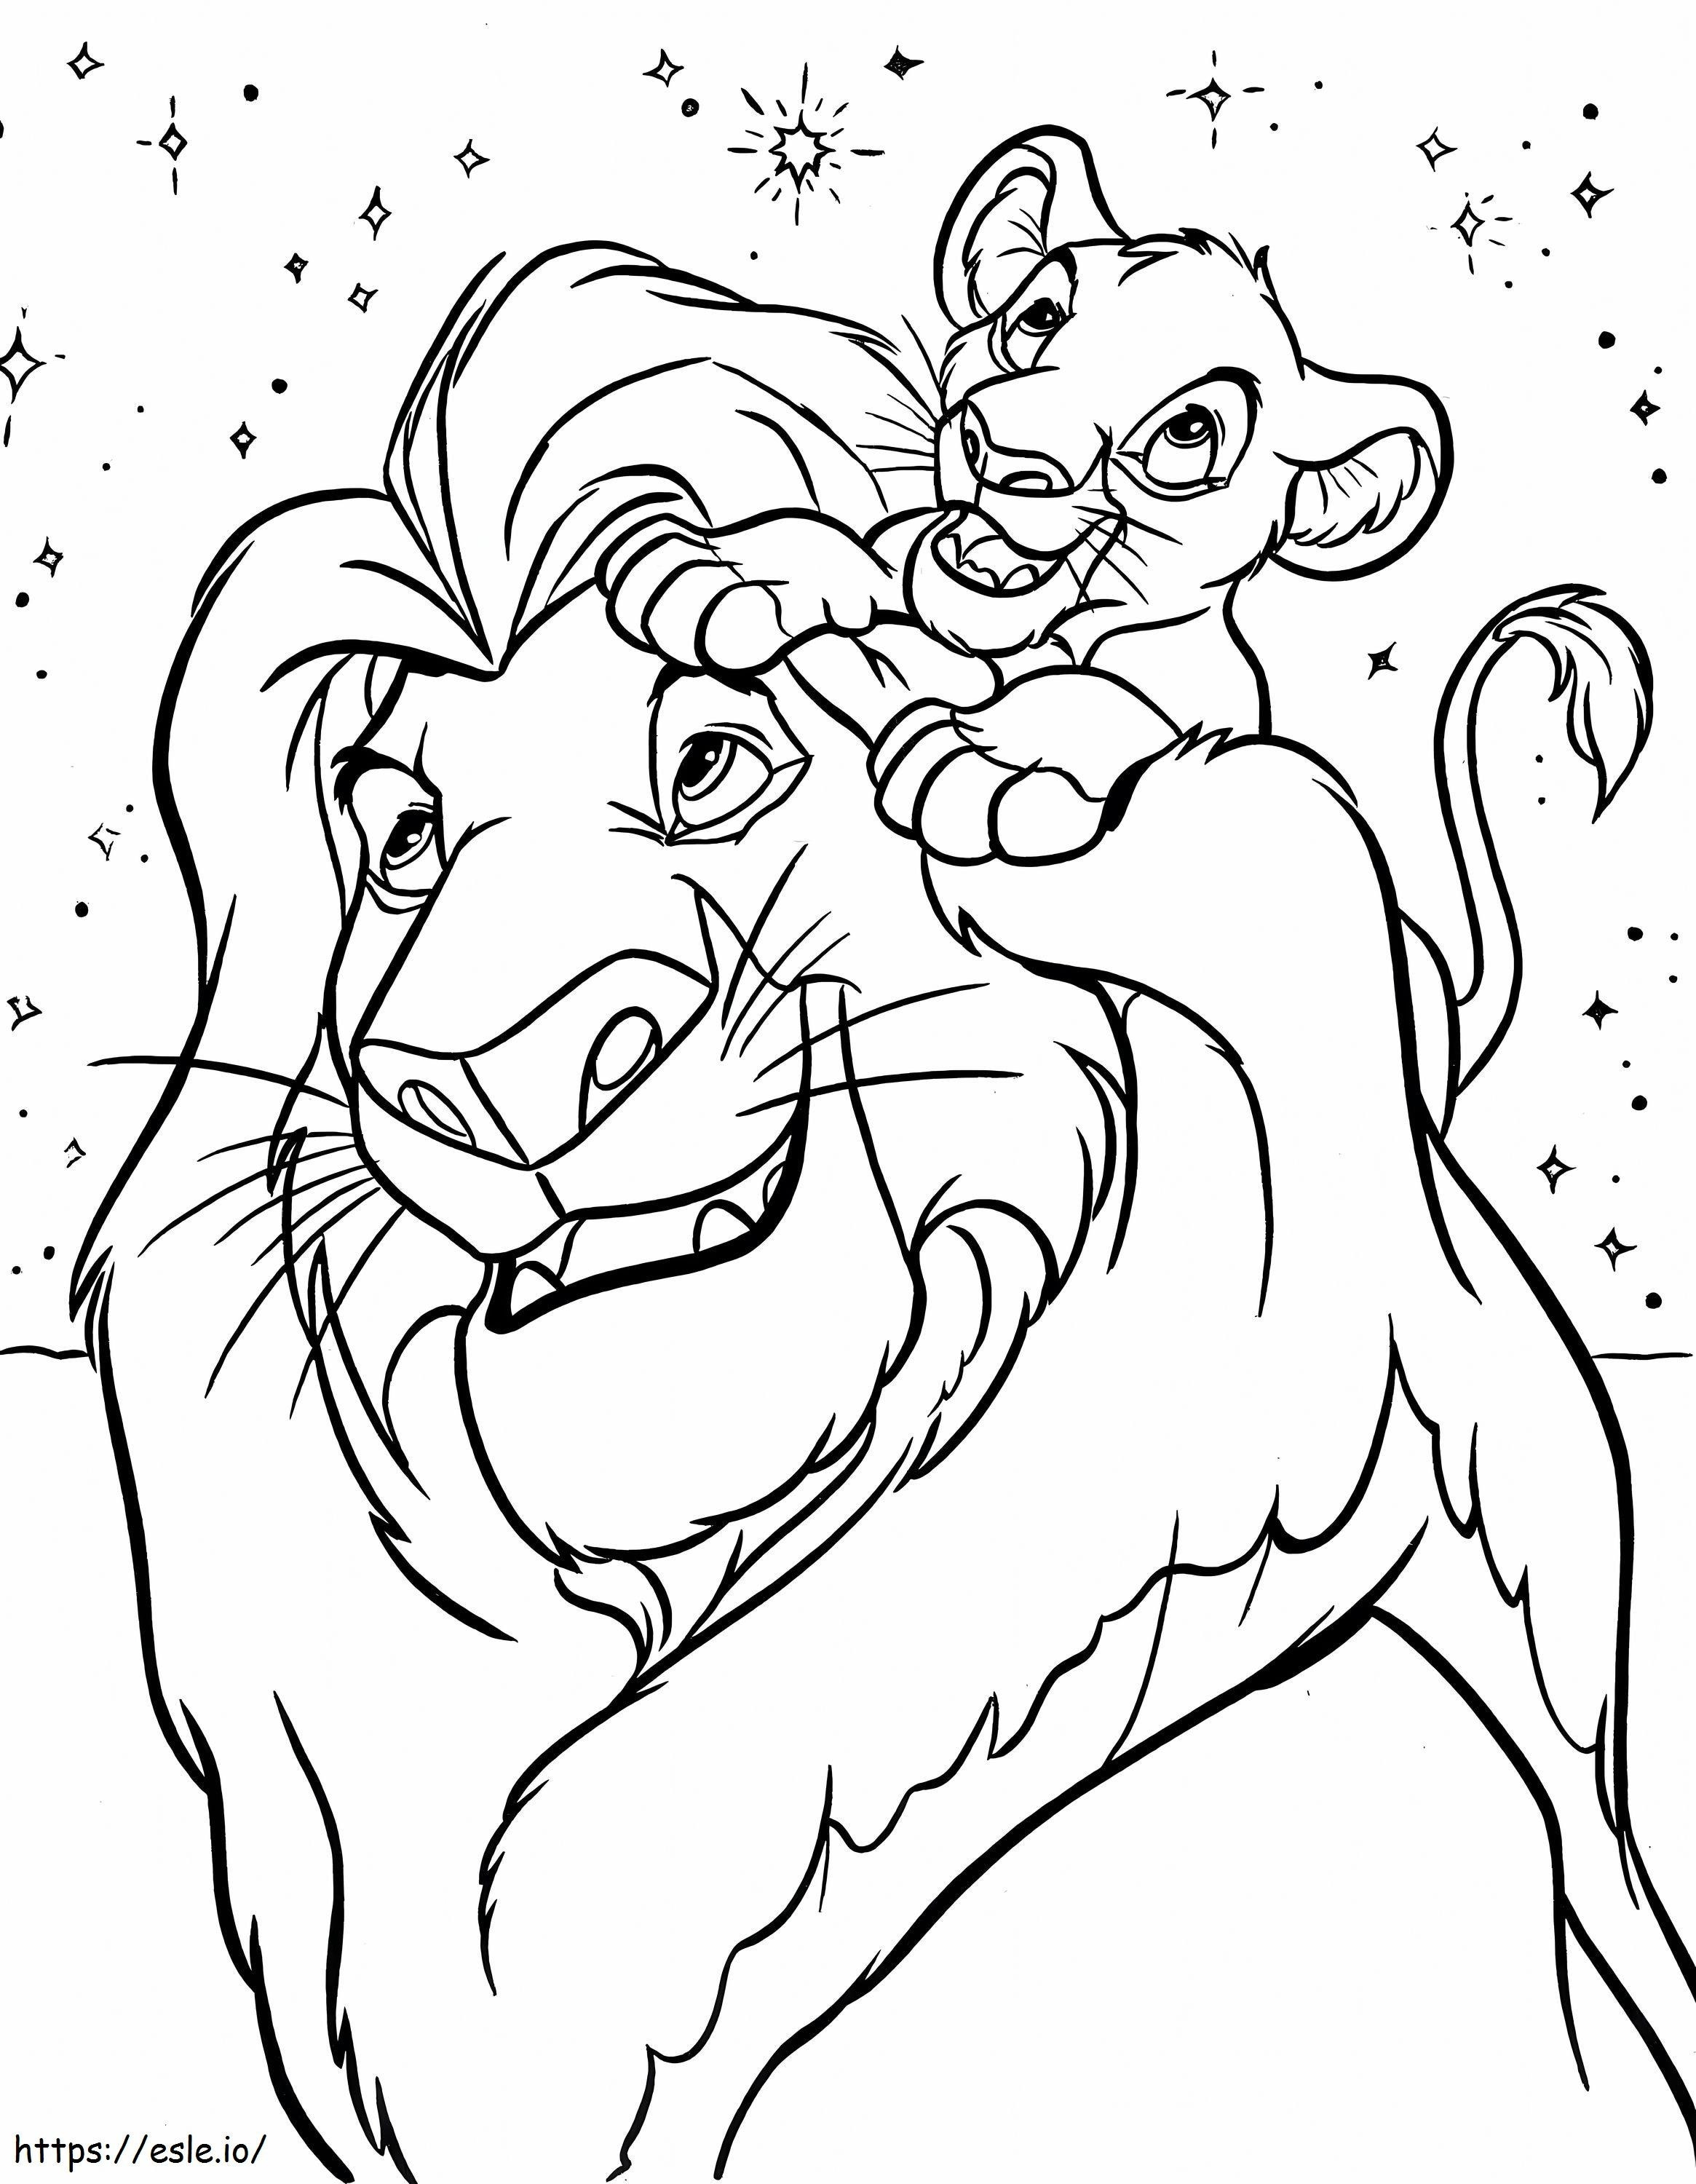 Disney Lion King coloring page